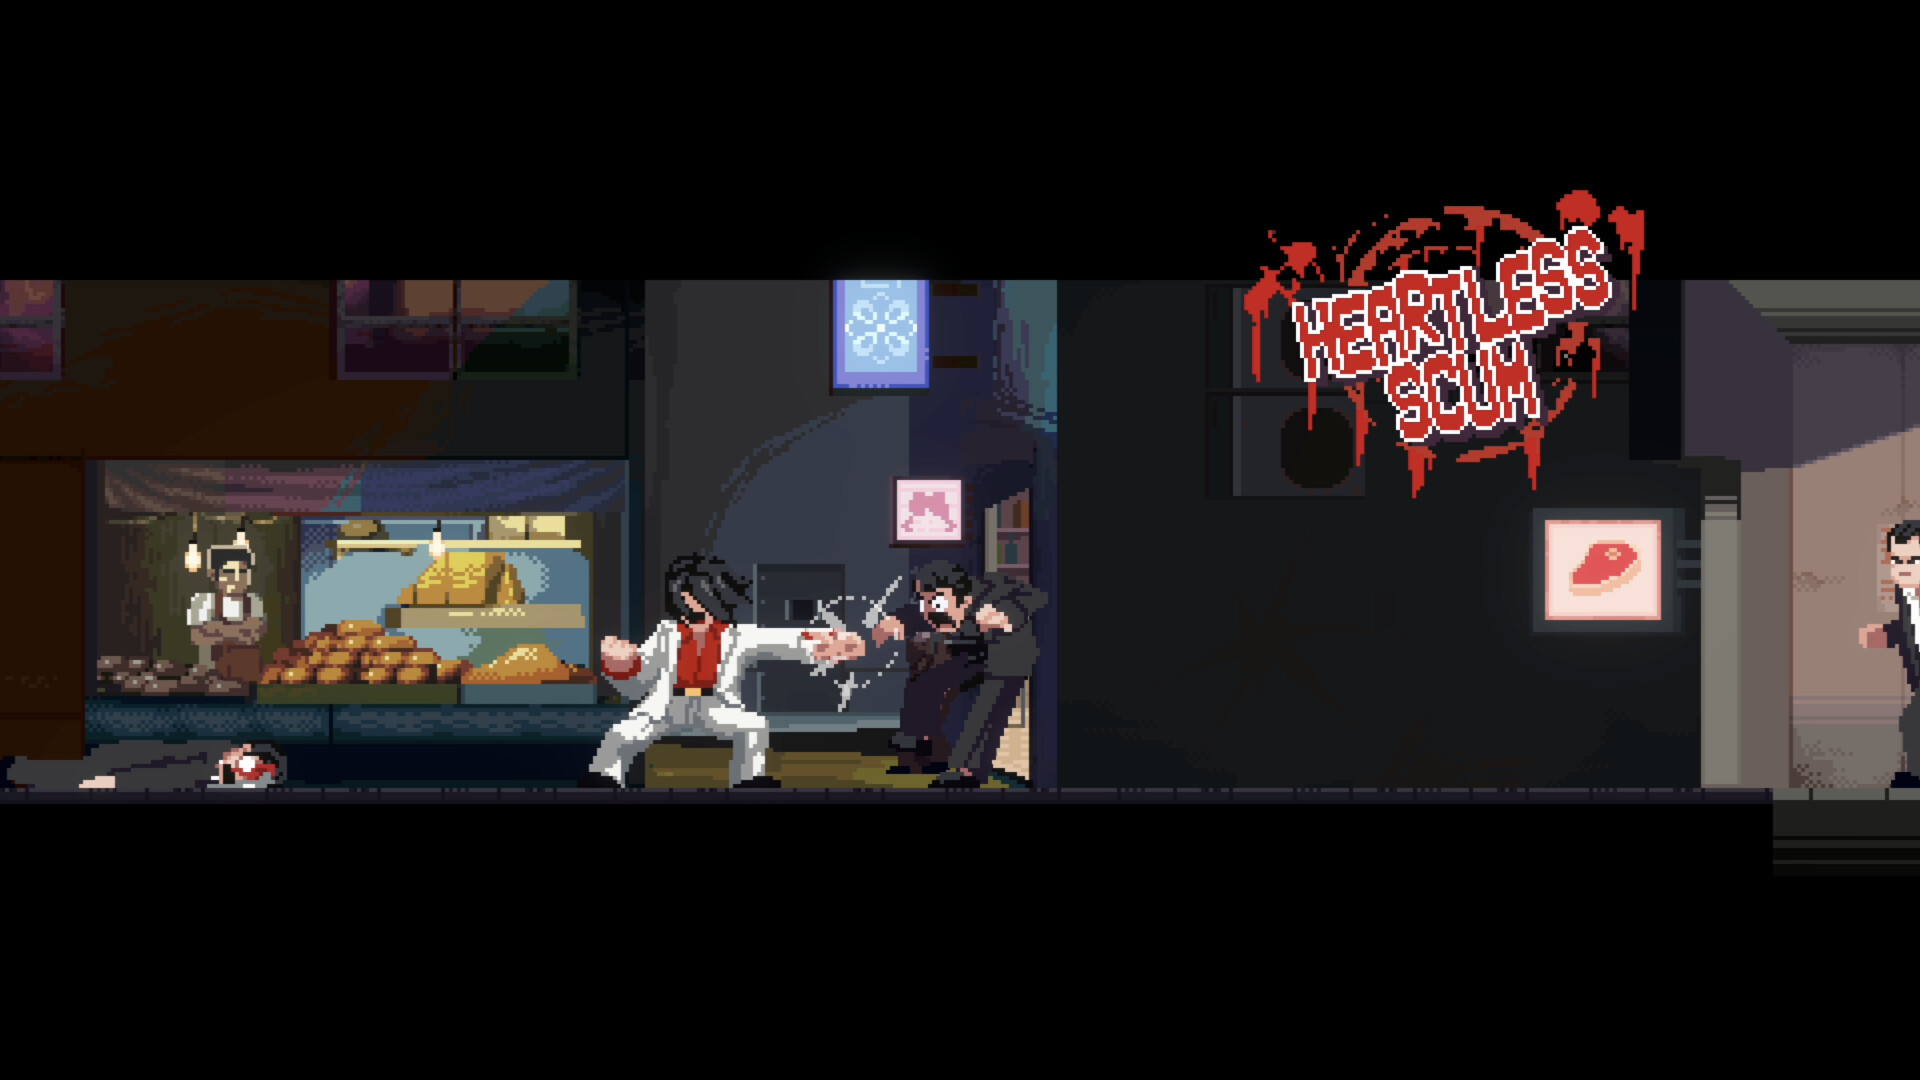 Vengeance of Mr. Peppermint - Official Trailer  Publisher Spotlights  Showcase 2023 (Freedom Games) 